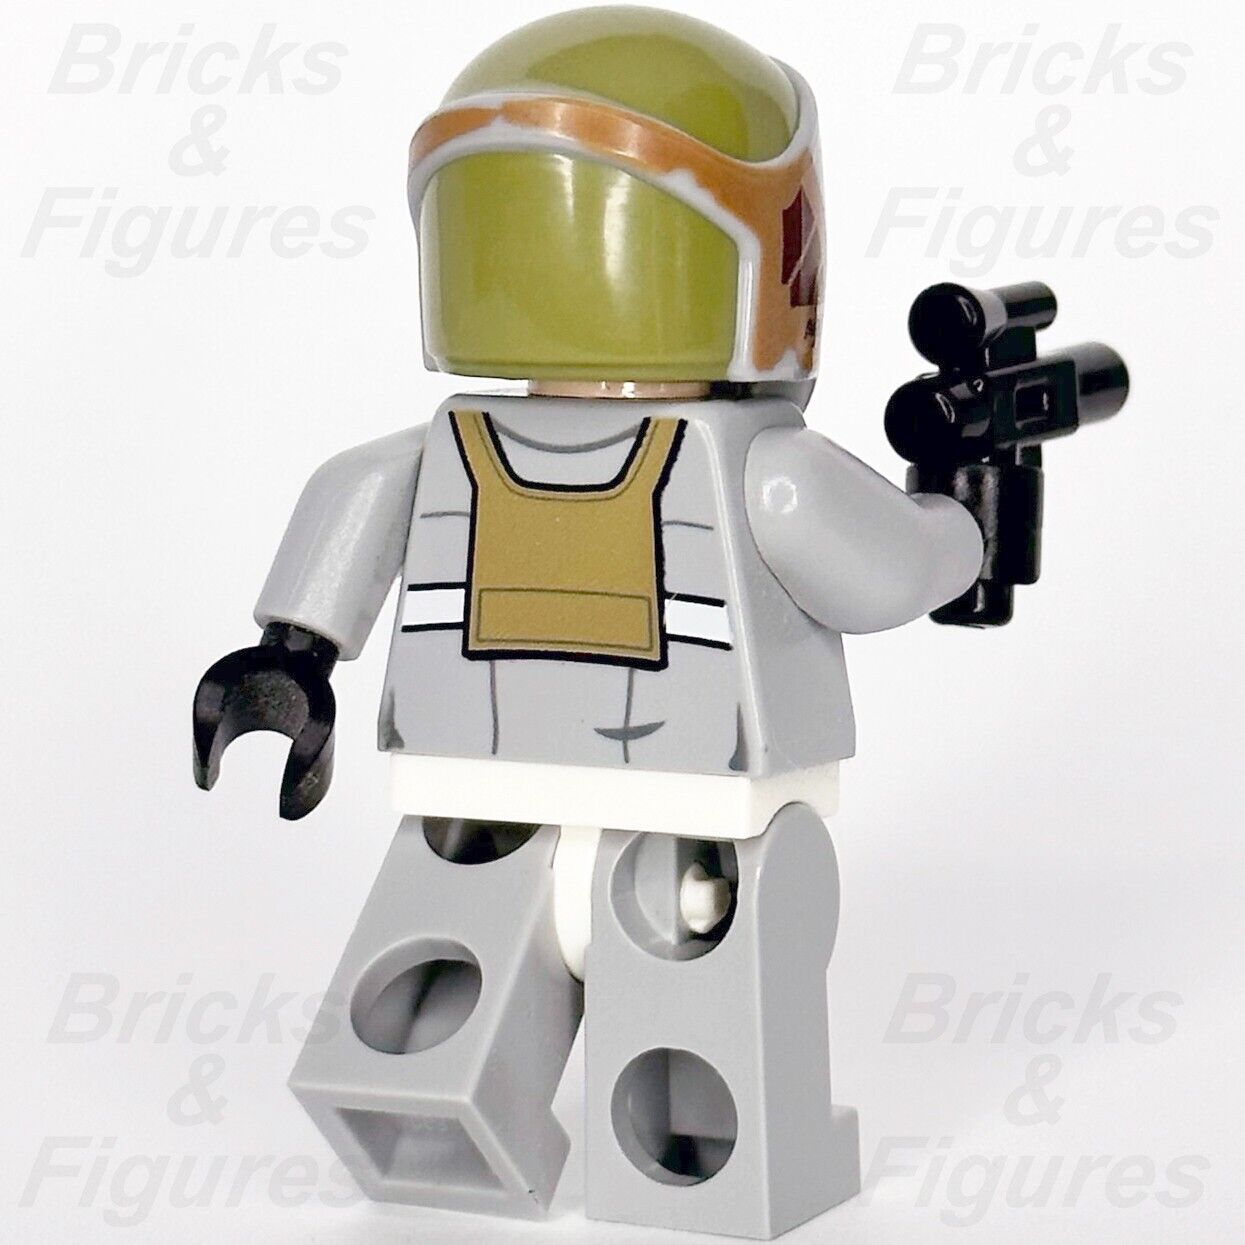 LEGO Star Wars Gray Squadron Pilot Minifigure Rebel B-Wing Fighter 75050 sw0558 - Bricks & Figures